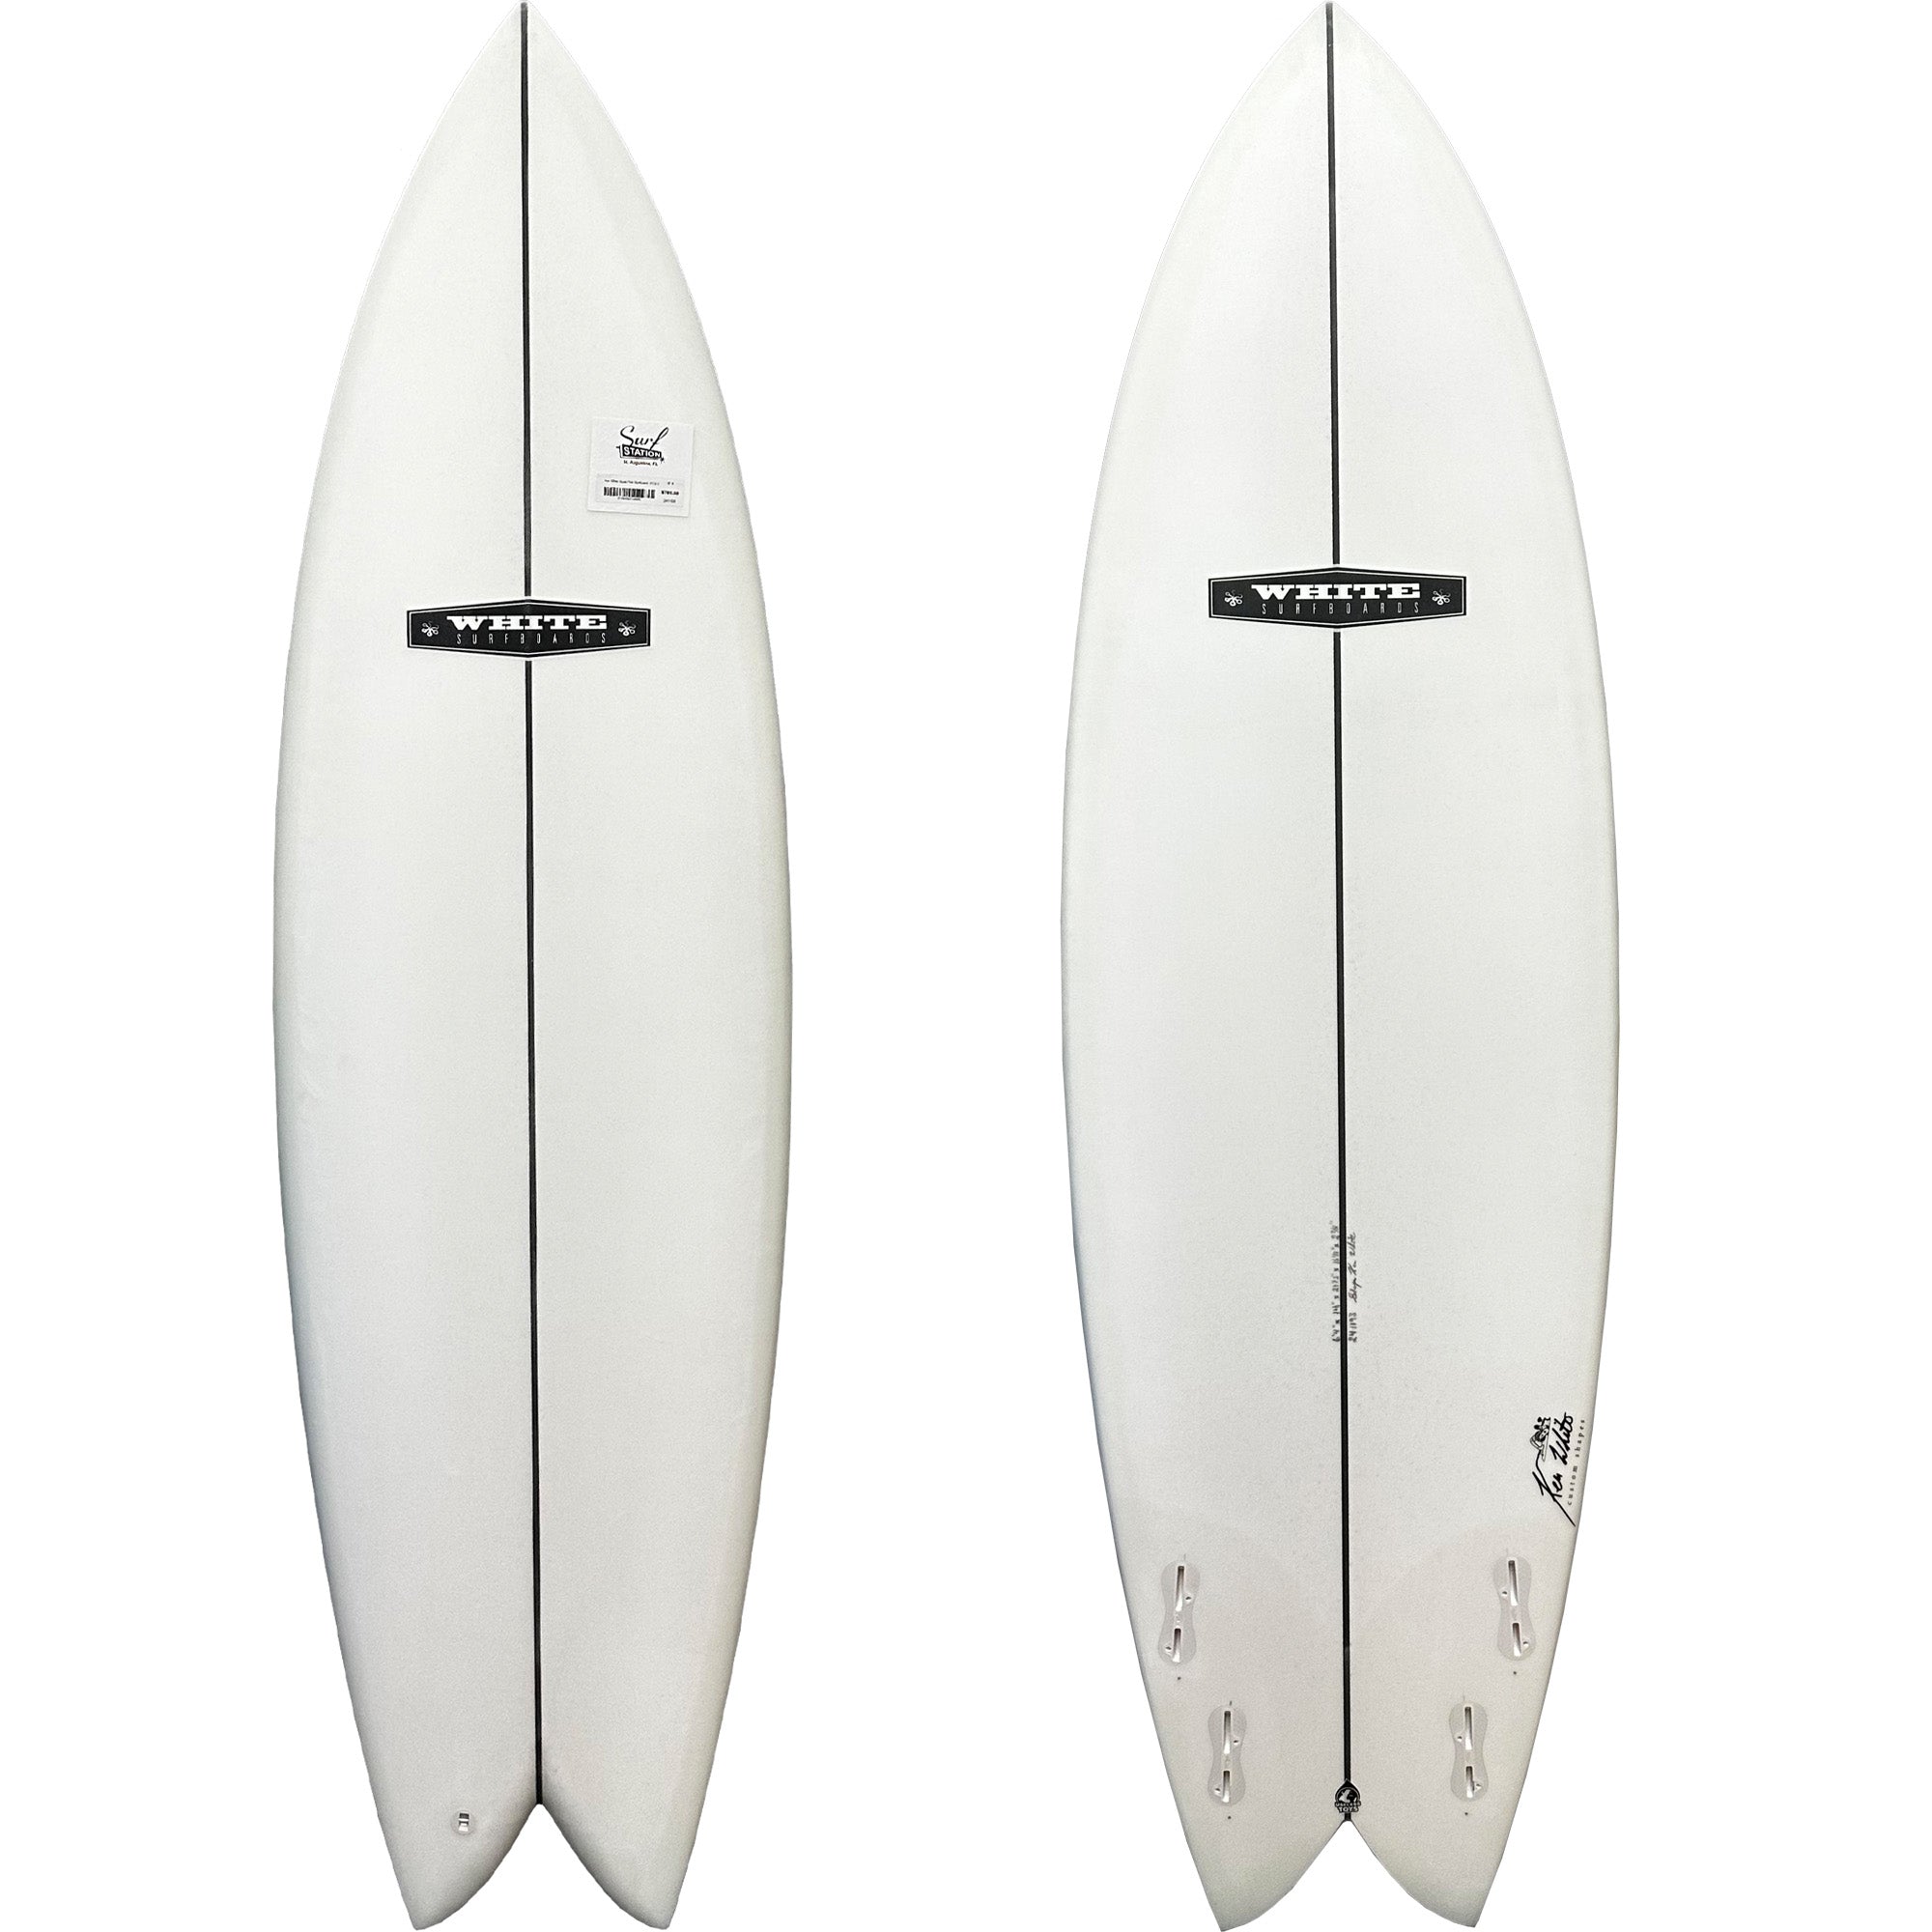 Ken White Quad Fish Surfboard - FCS II - Surf Station Store